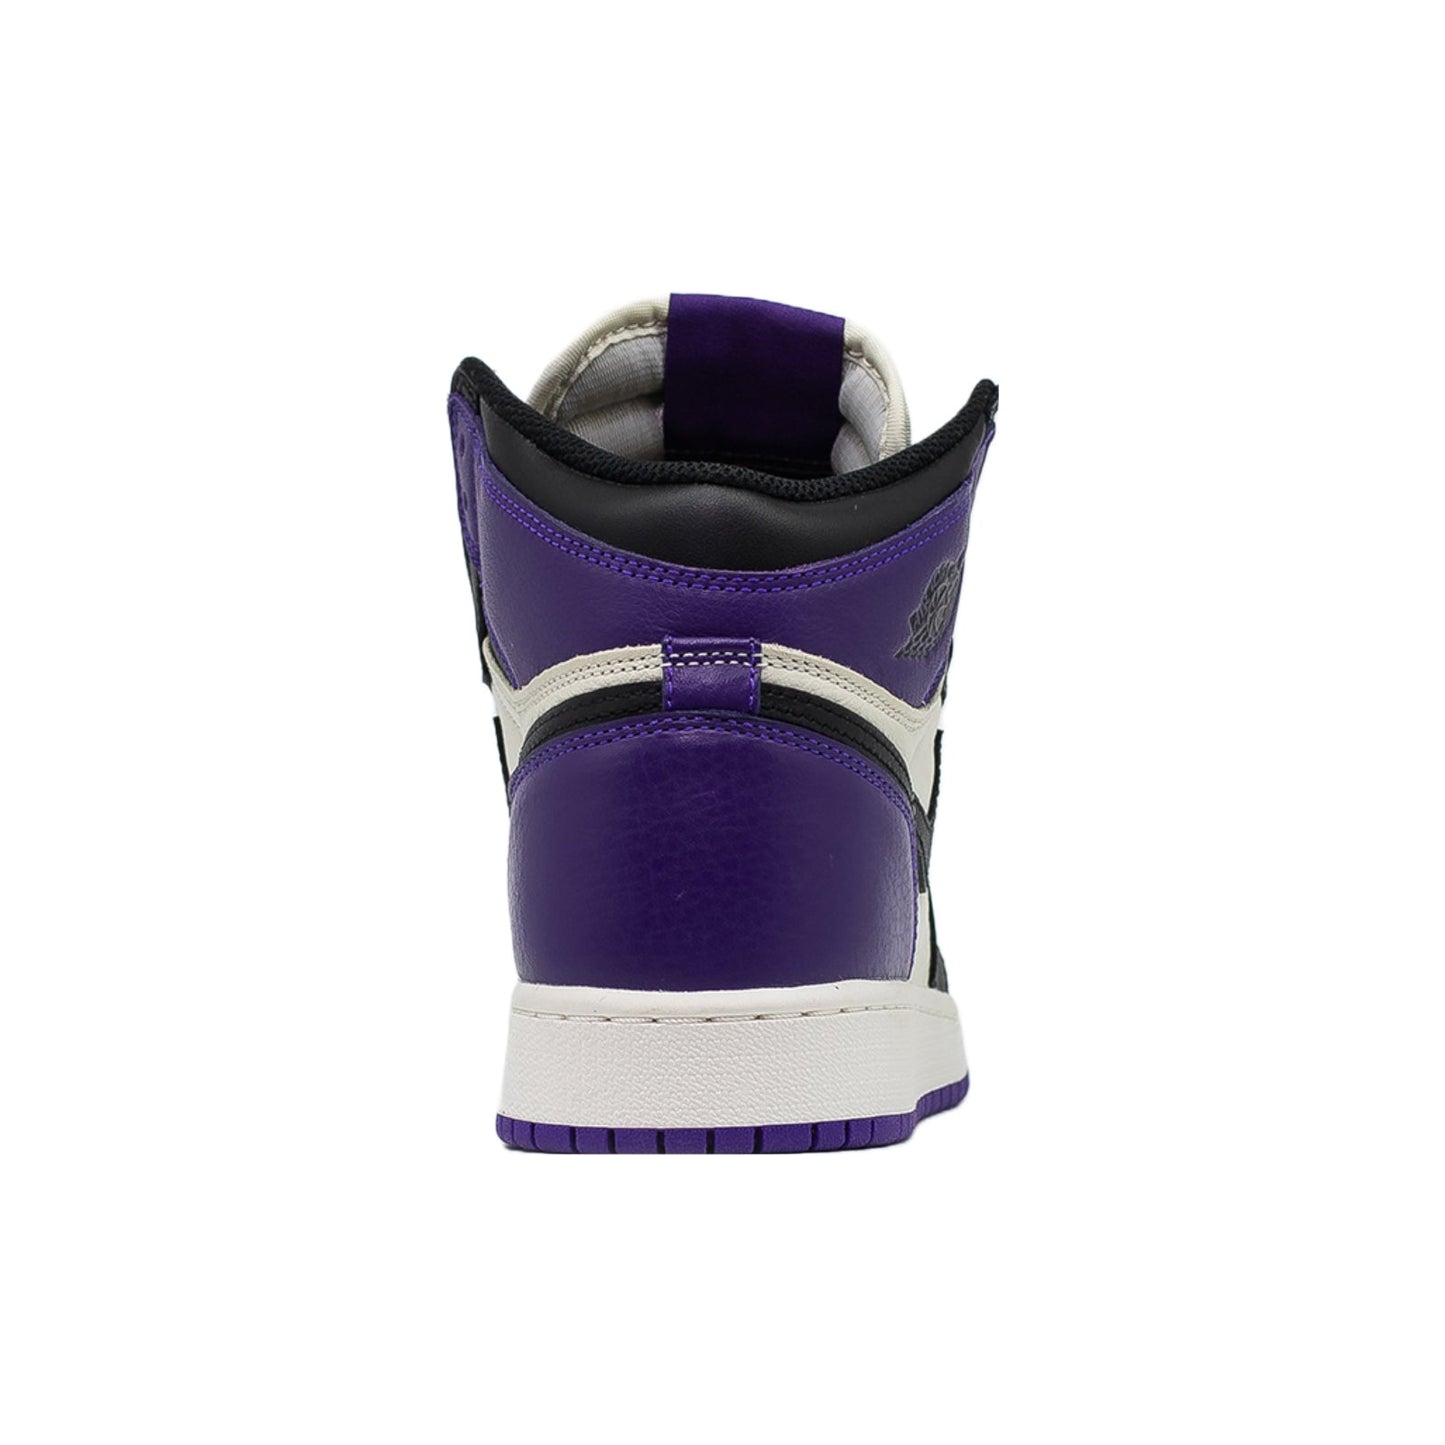 Air womens jordan black sneaker (GS), Court Purple